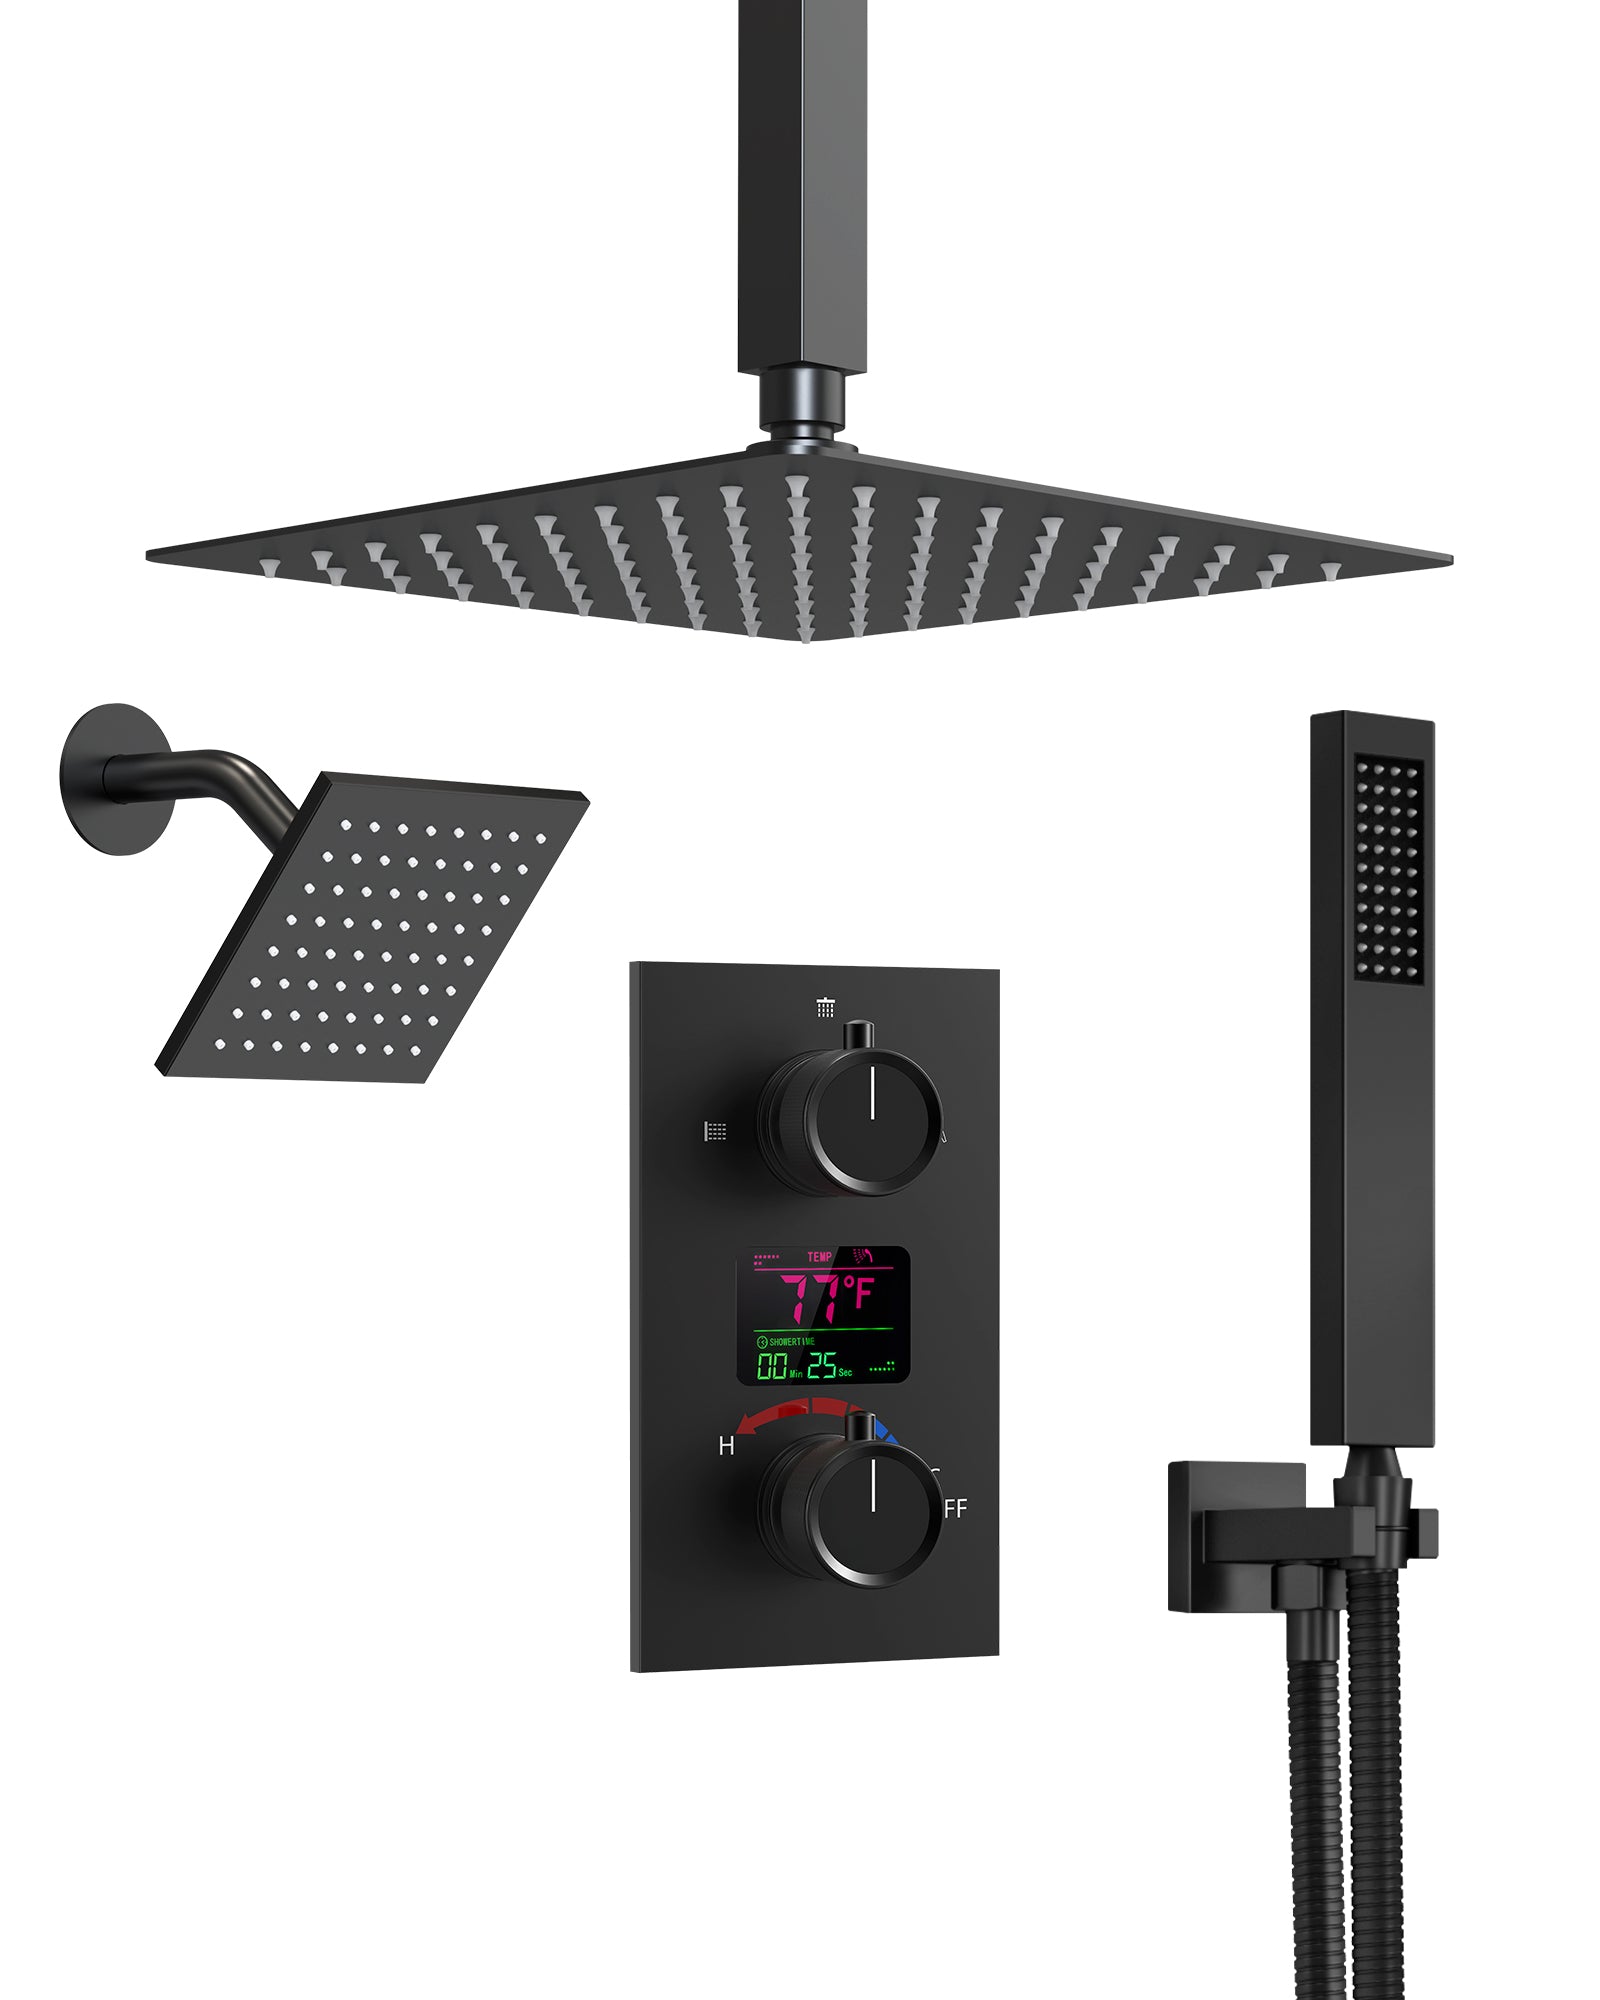 EVERSTEIN Matte Black Rainfall Dual Shower Head System - High-Pressure 12" Ceiling Rain Showerhead with LCD & Handheld Spray